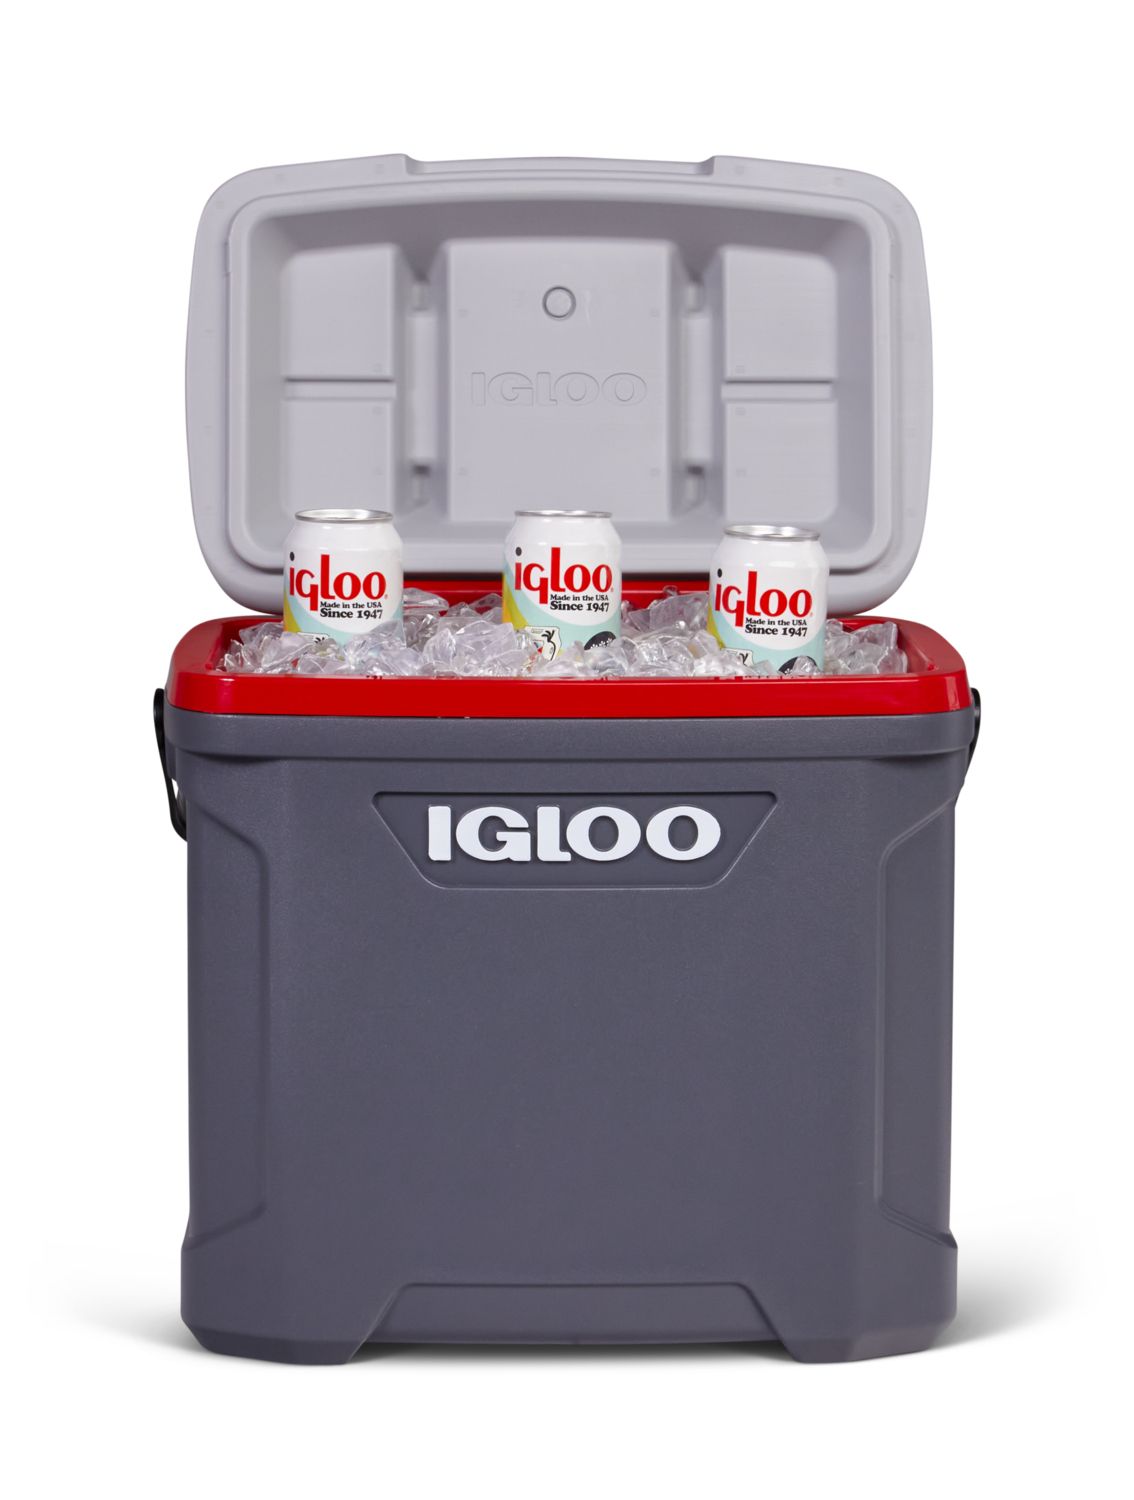 Igloo 30 Quart Latitude Cooler